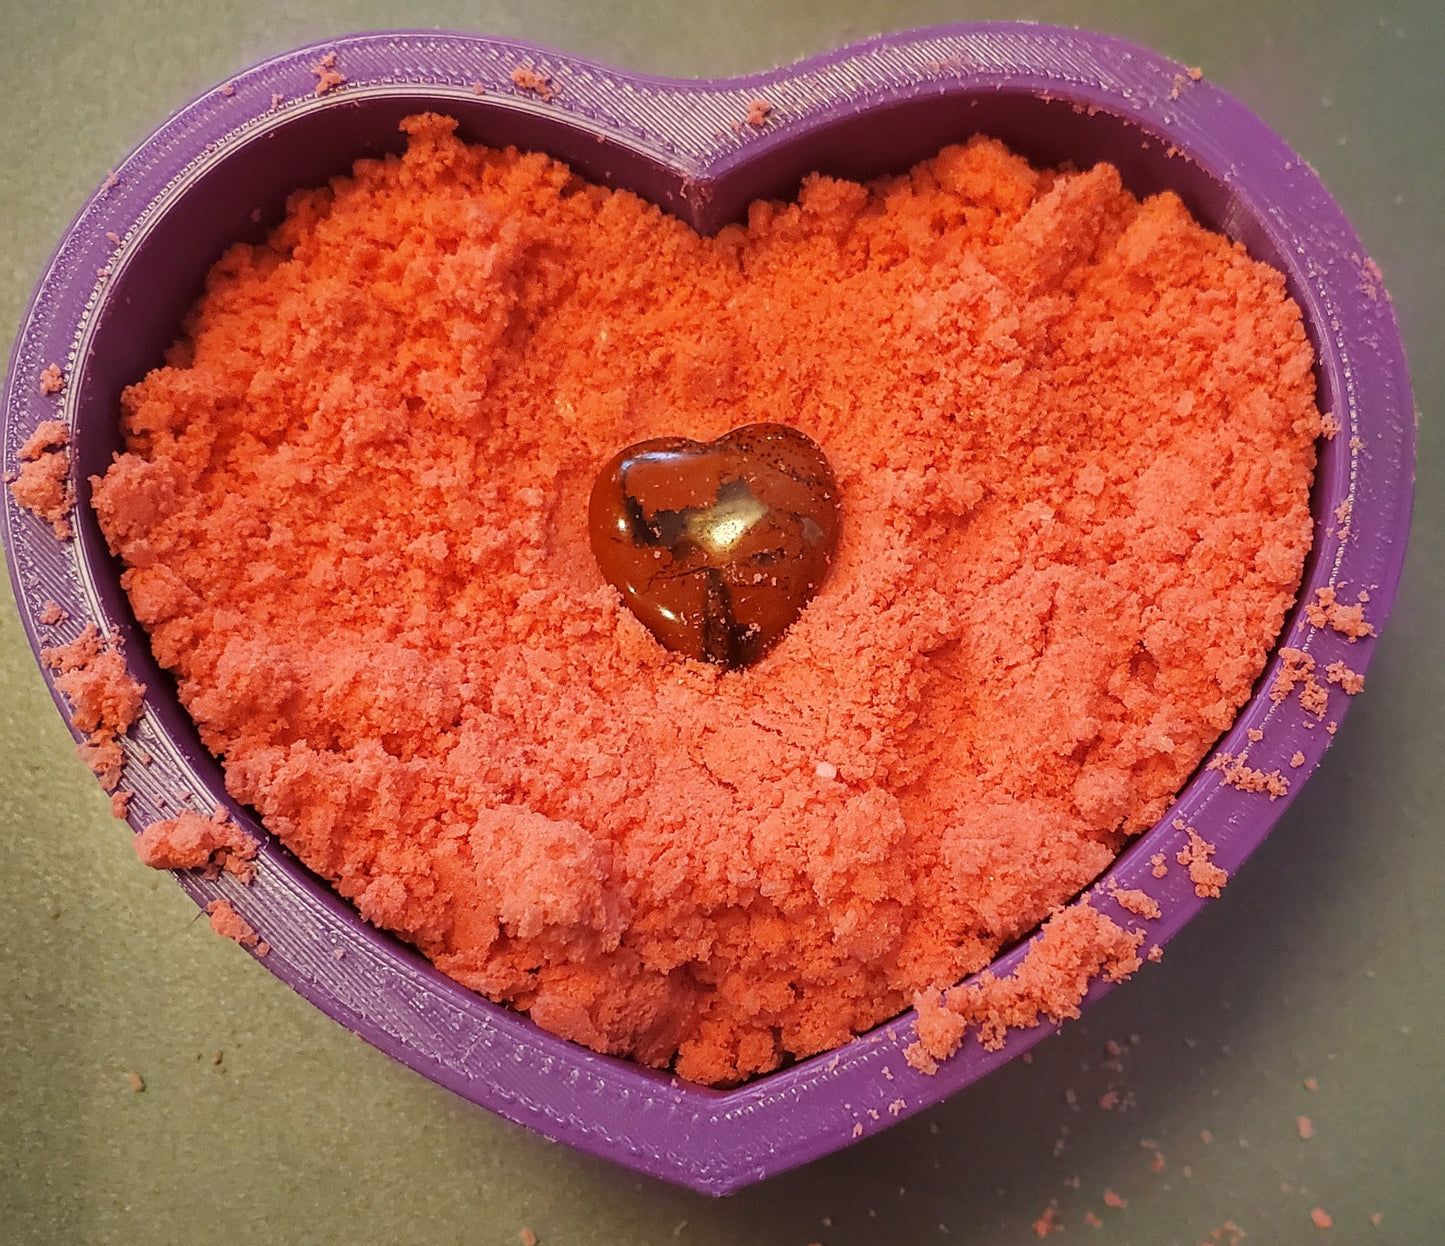 Heart-shaped Bath Bombs with Gemstone inside